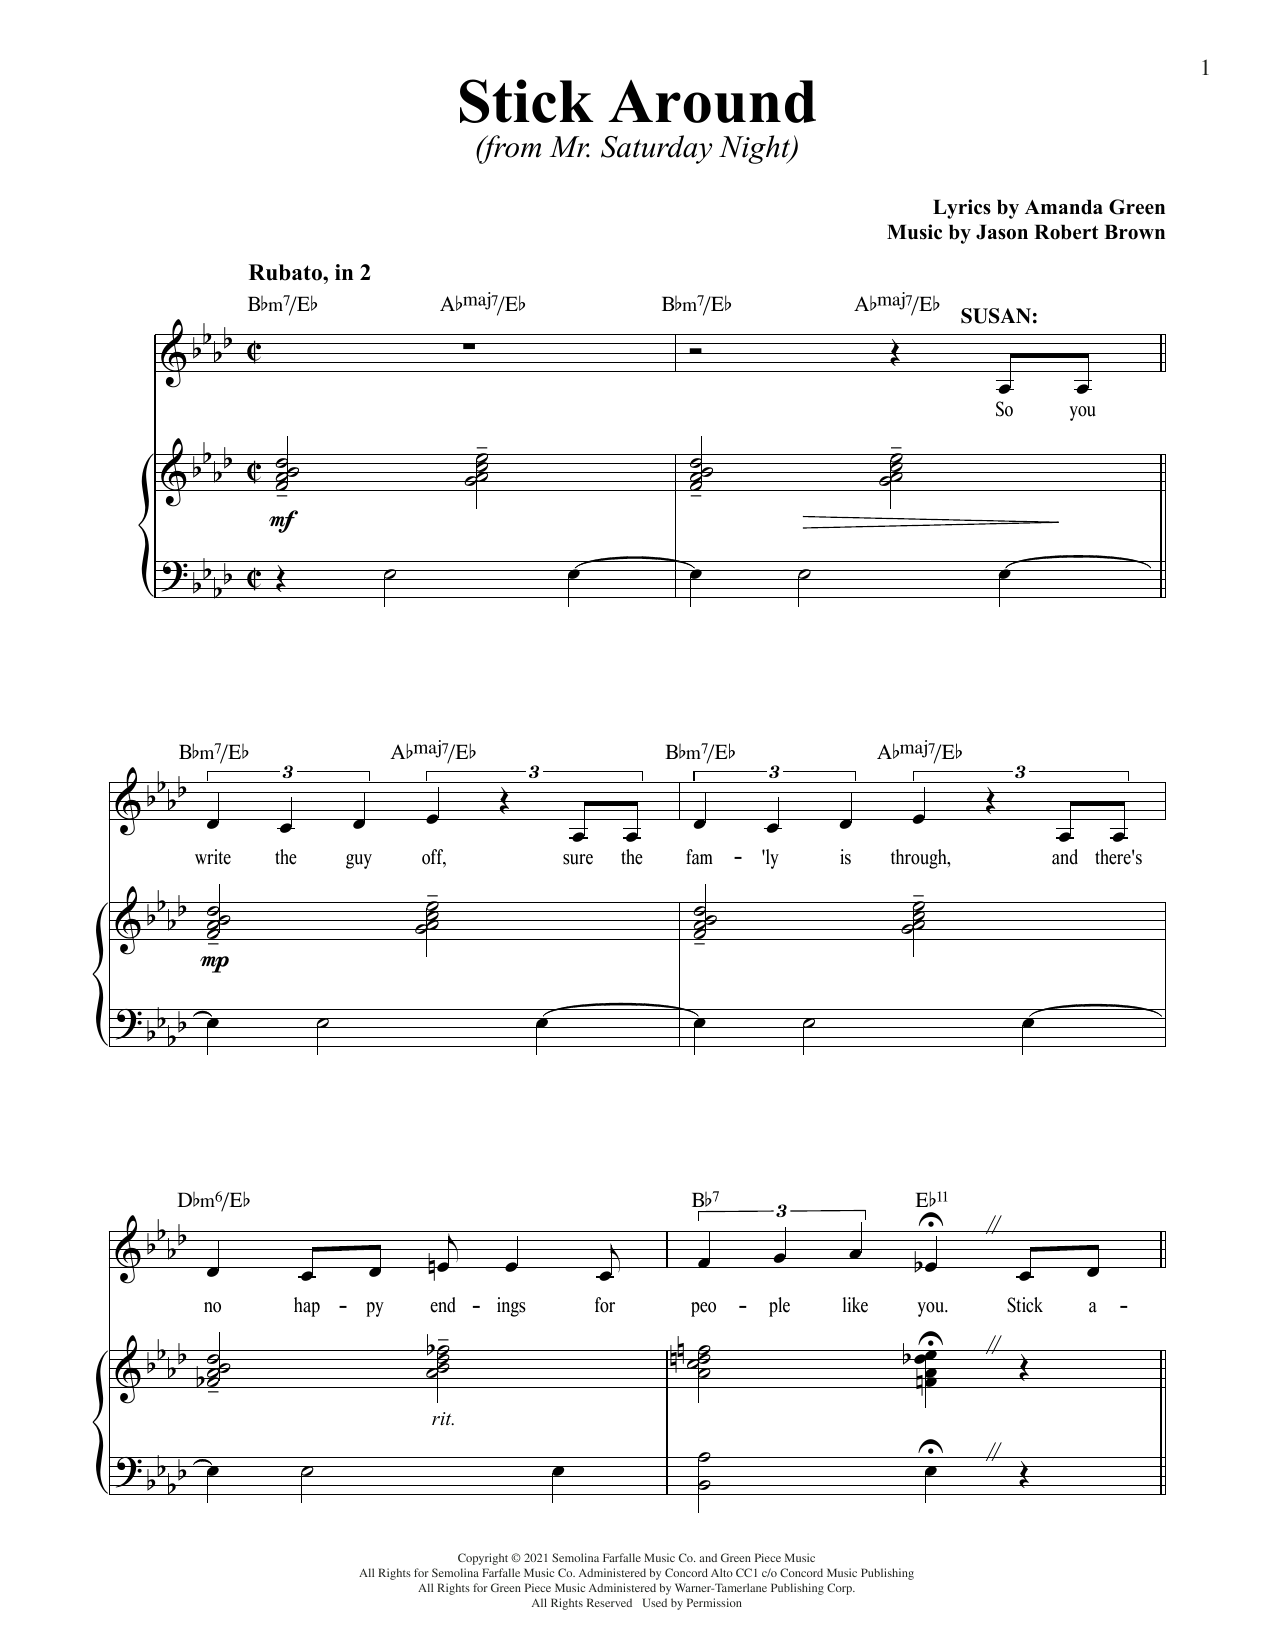 Jason Robert Brown and Amanda Green Stick Around (from Mr. Saturday Night) sheet music notes printable PDF score